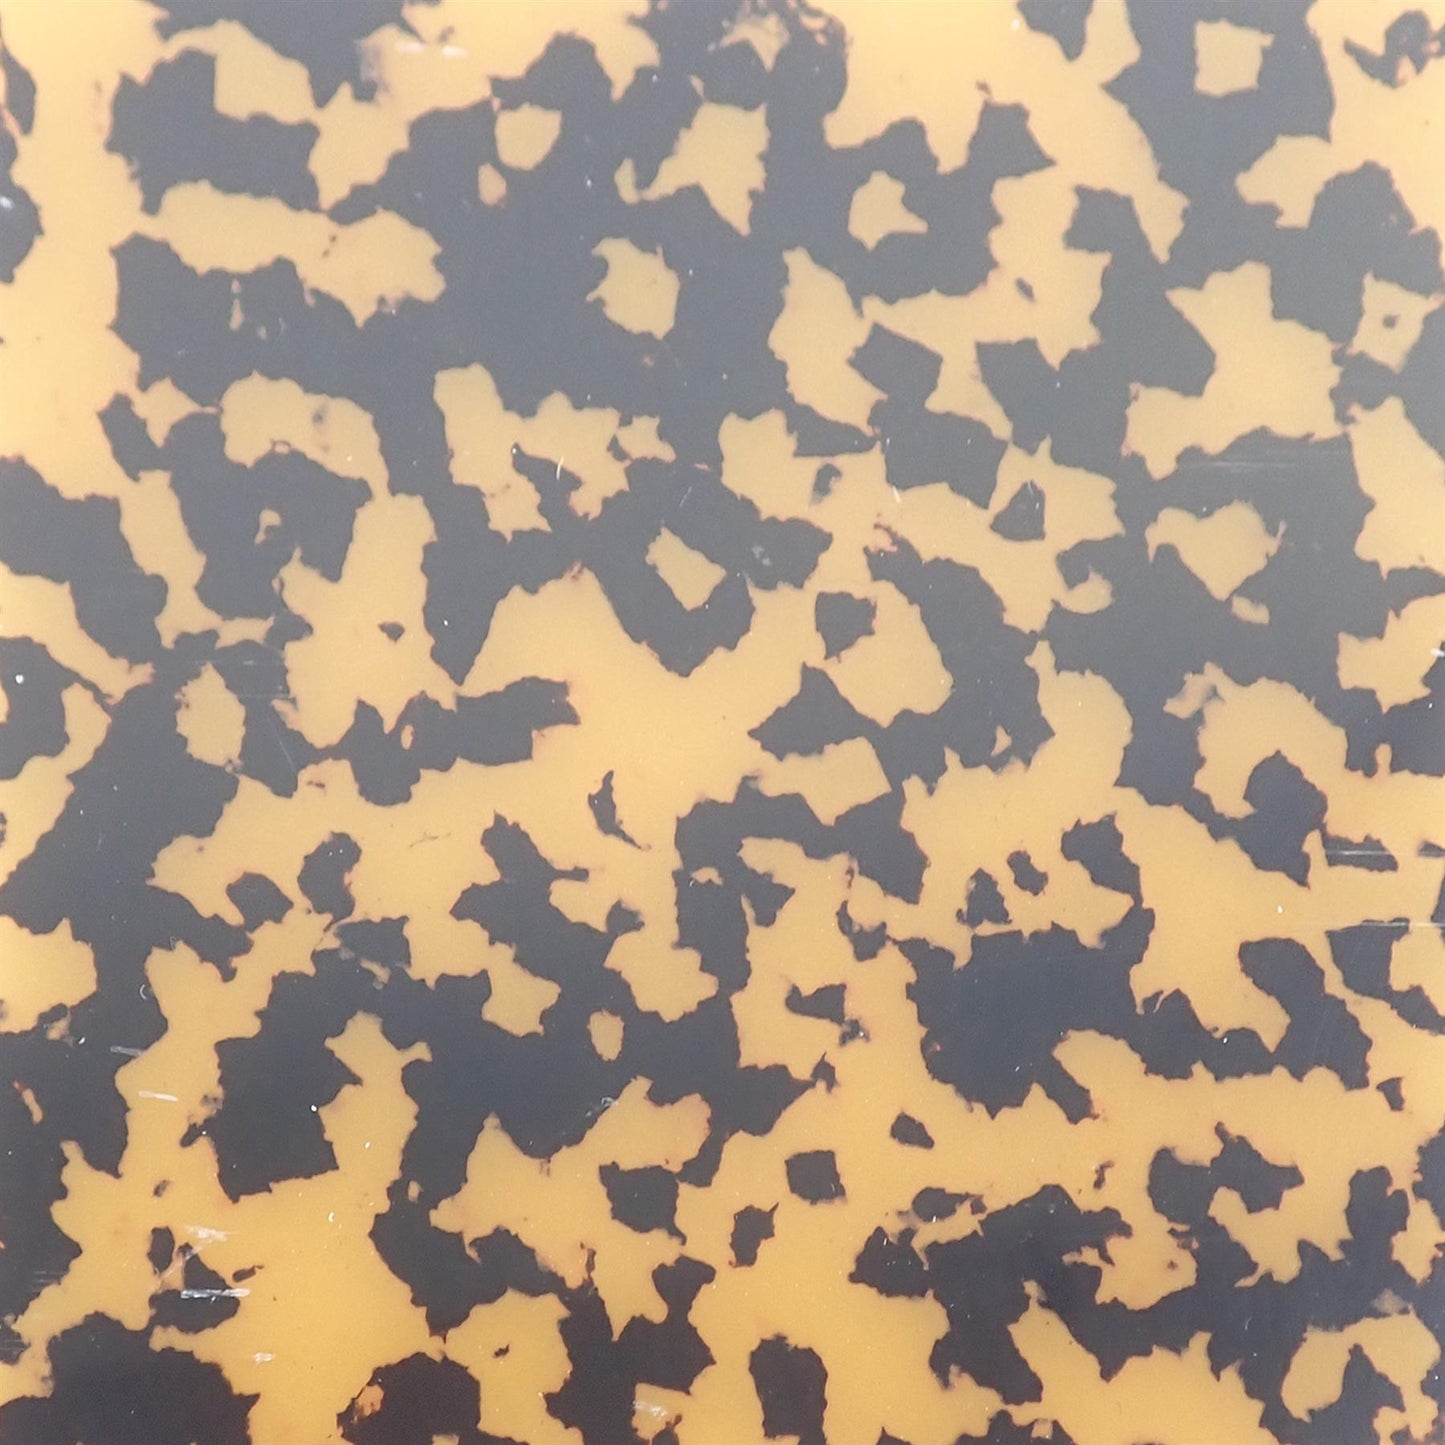 Incudo Dark Spotted Tortoiseshell Celluloid Laminate Acrylic Sheet - 600x400x3mm (23.6x15.75x0.12")